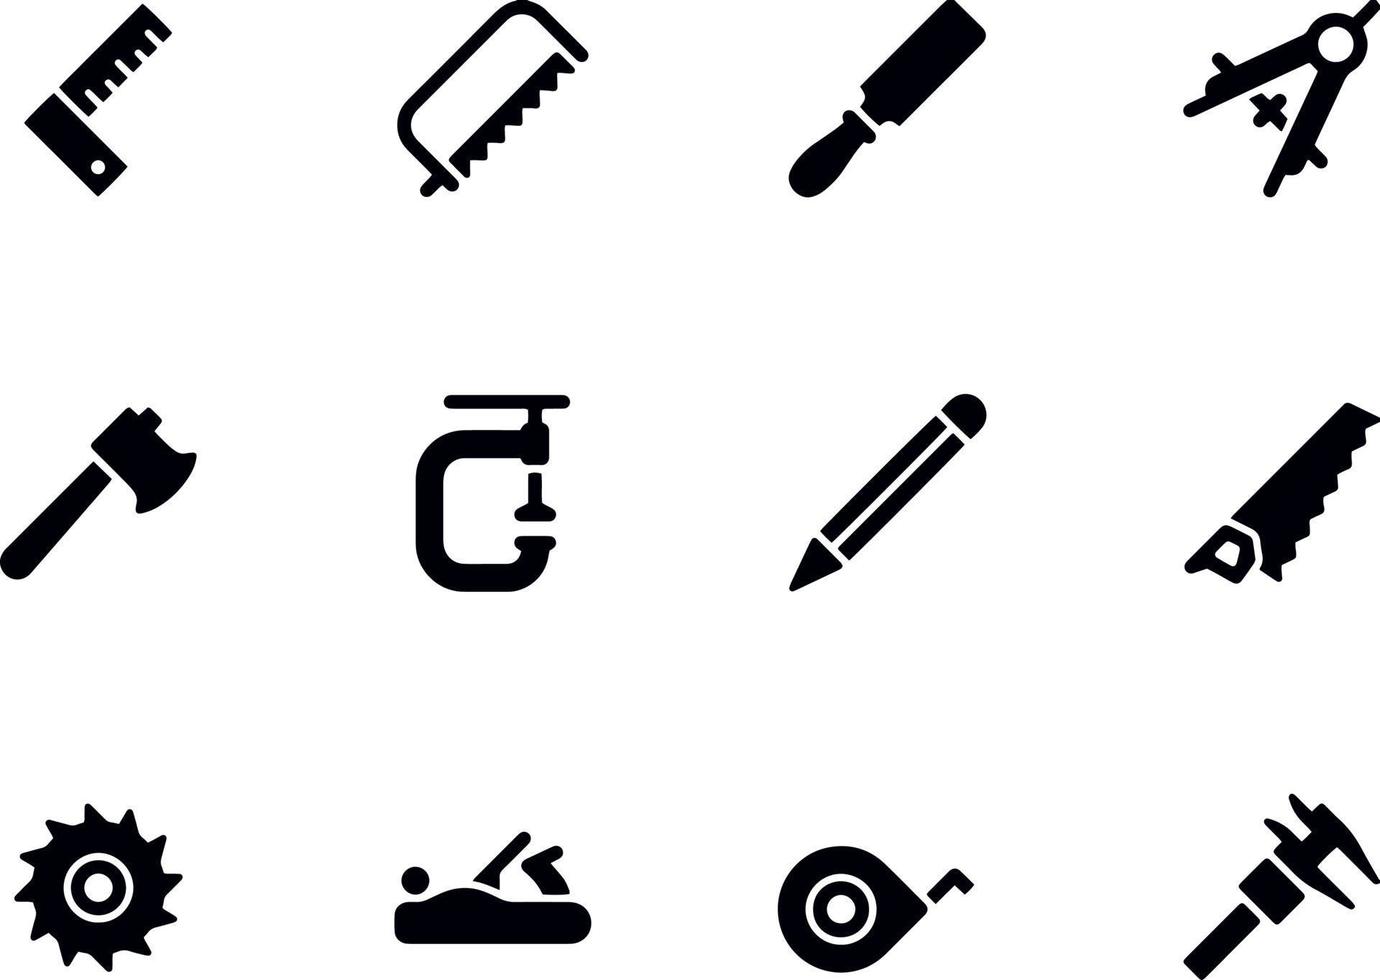 design de vetor de ícones de ferramentas de carpintaria